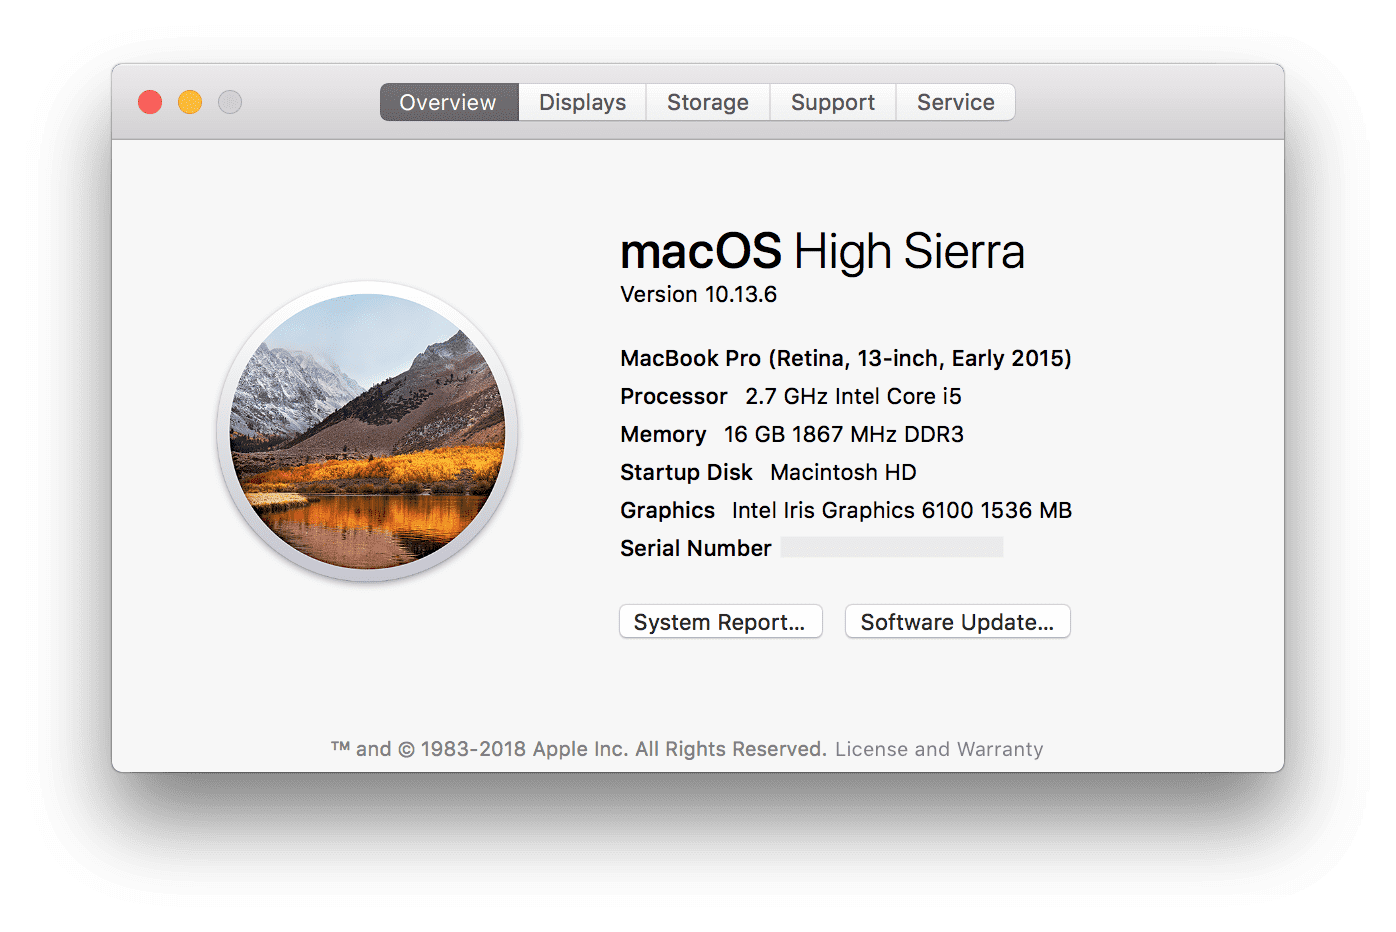 apple mac memory cleaner